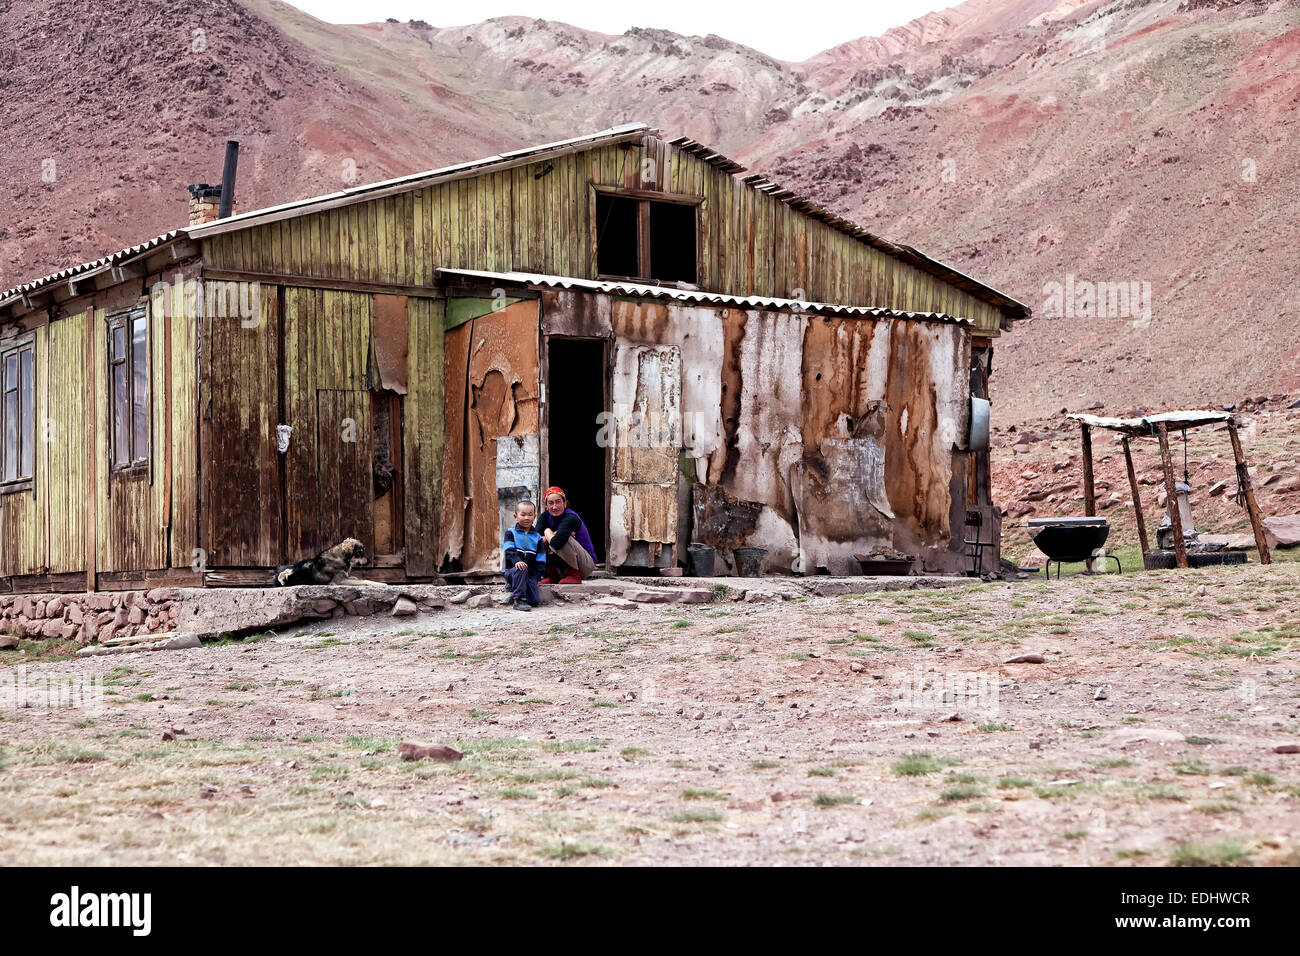 People sitting outside a delapidated hut, settlement on the Pamir Highway, M41, Province of Gorno-Badakhshan, Tajikistan Stock Photo